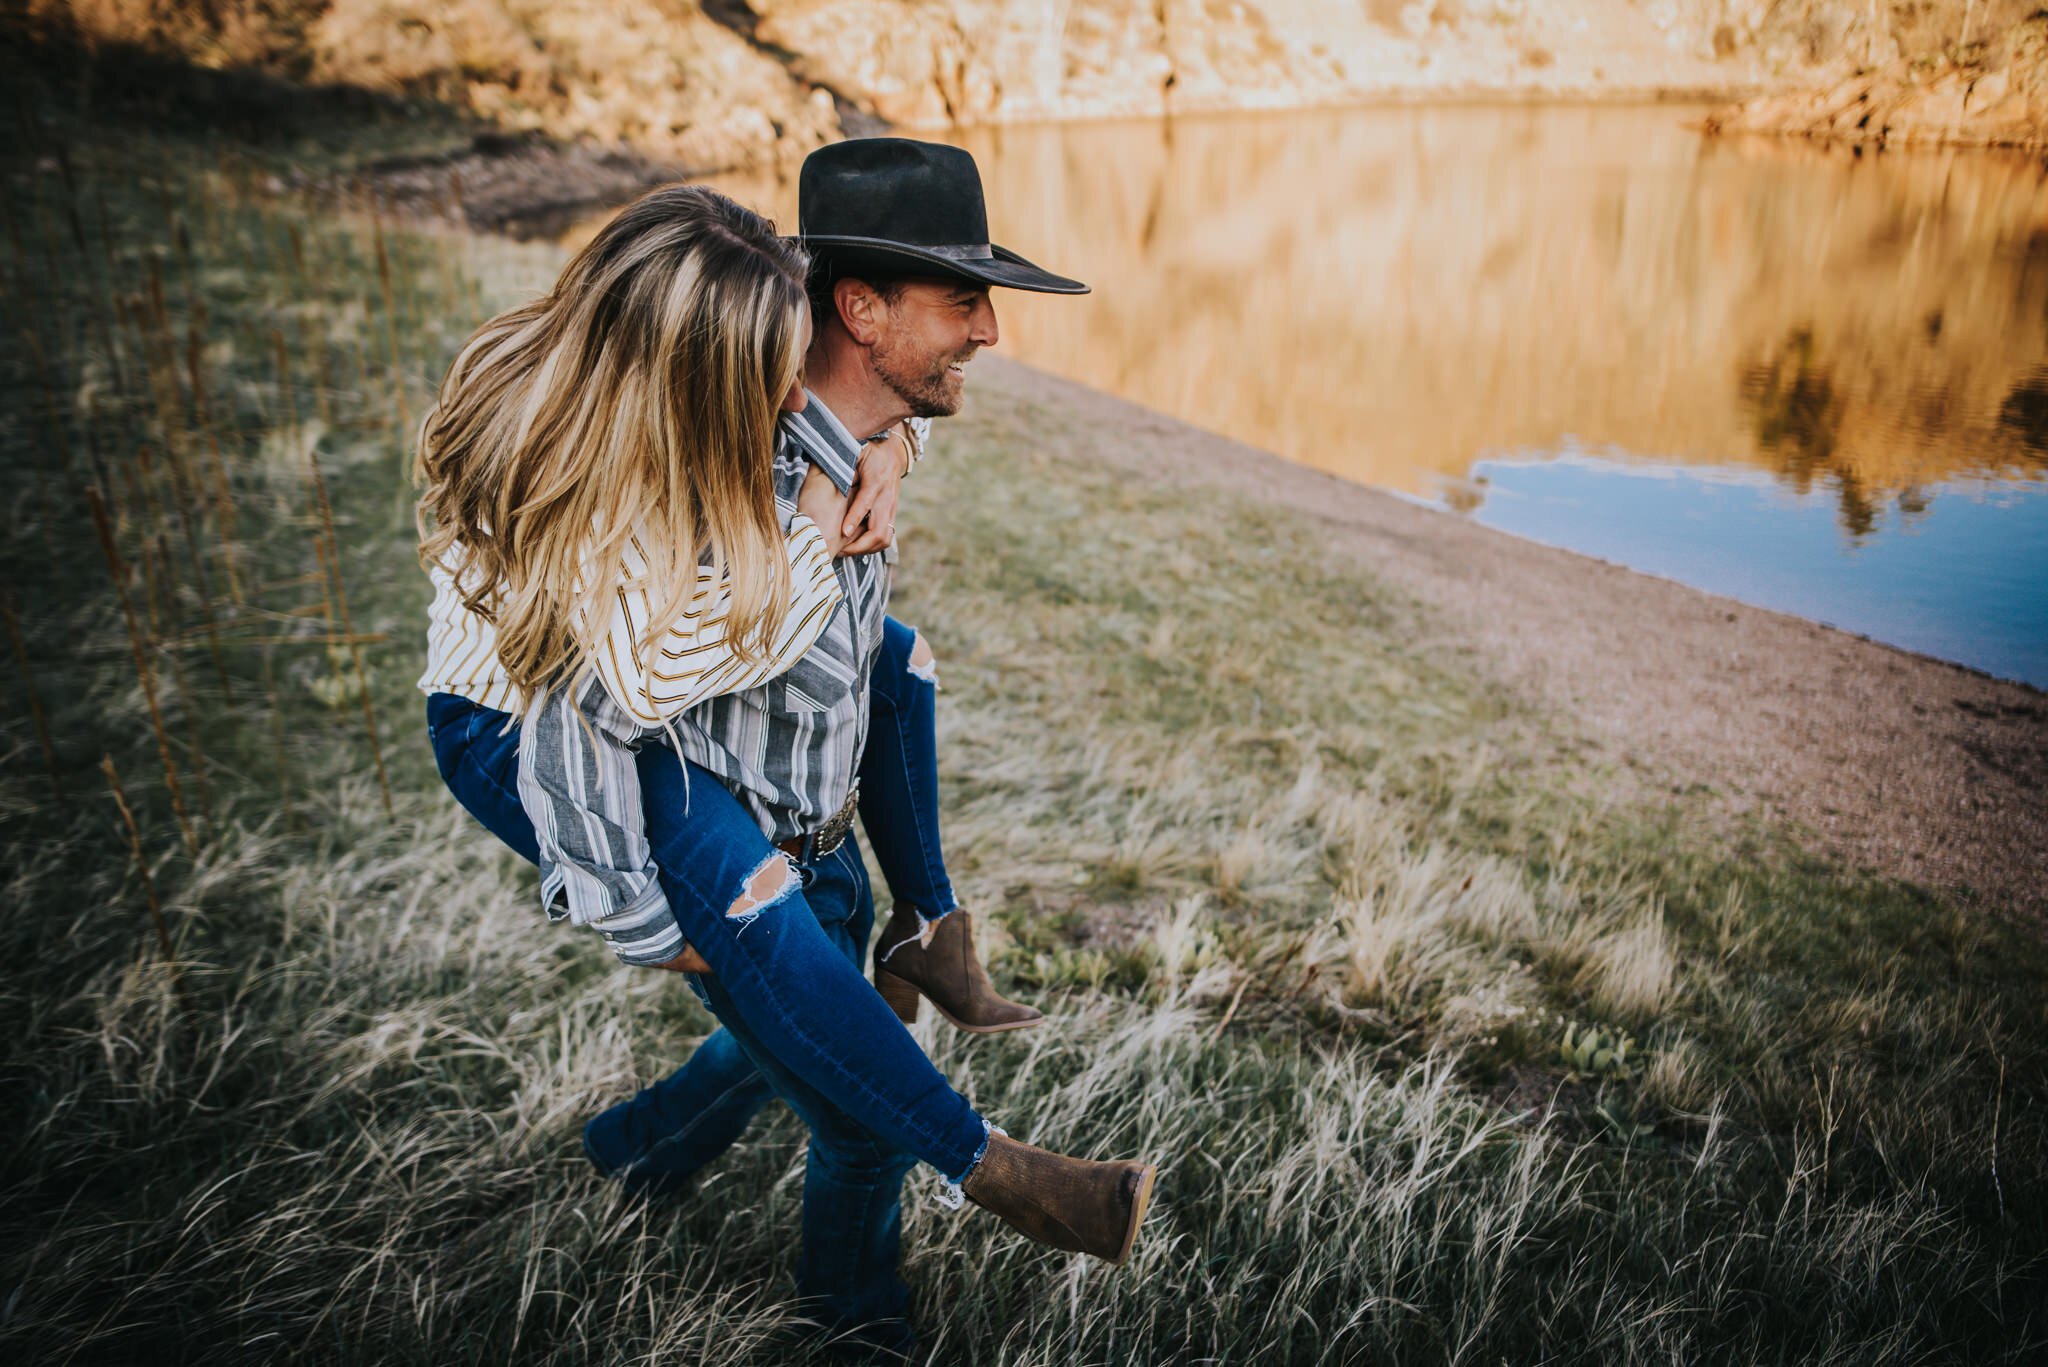 Shelby+and+Brady+Engagement+Session+Cheyenne+Wyoming+Sunset+Water+Fields+Rocks+Nature+Colorado+Photographer+Wild+Prairie+Photography-07-2020.jpeg